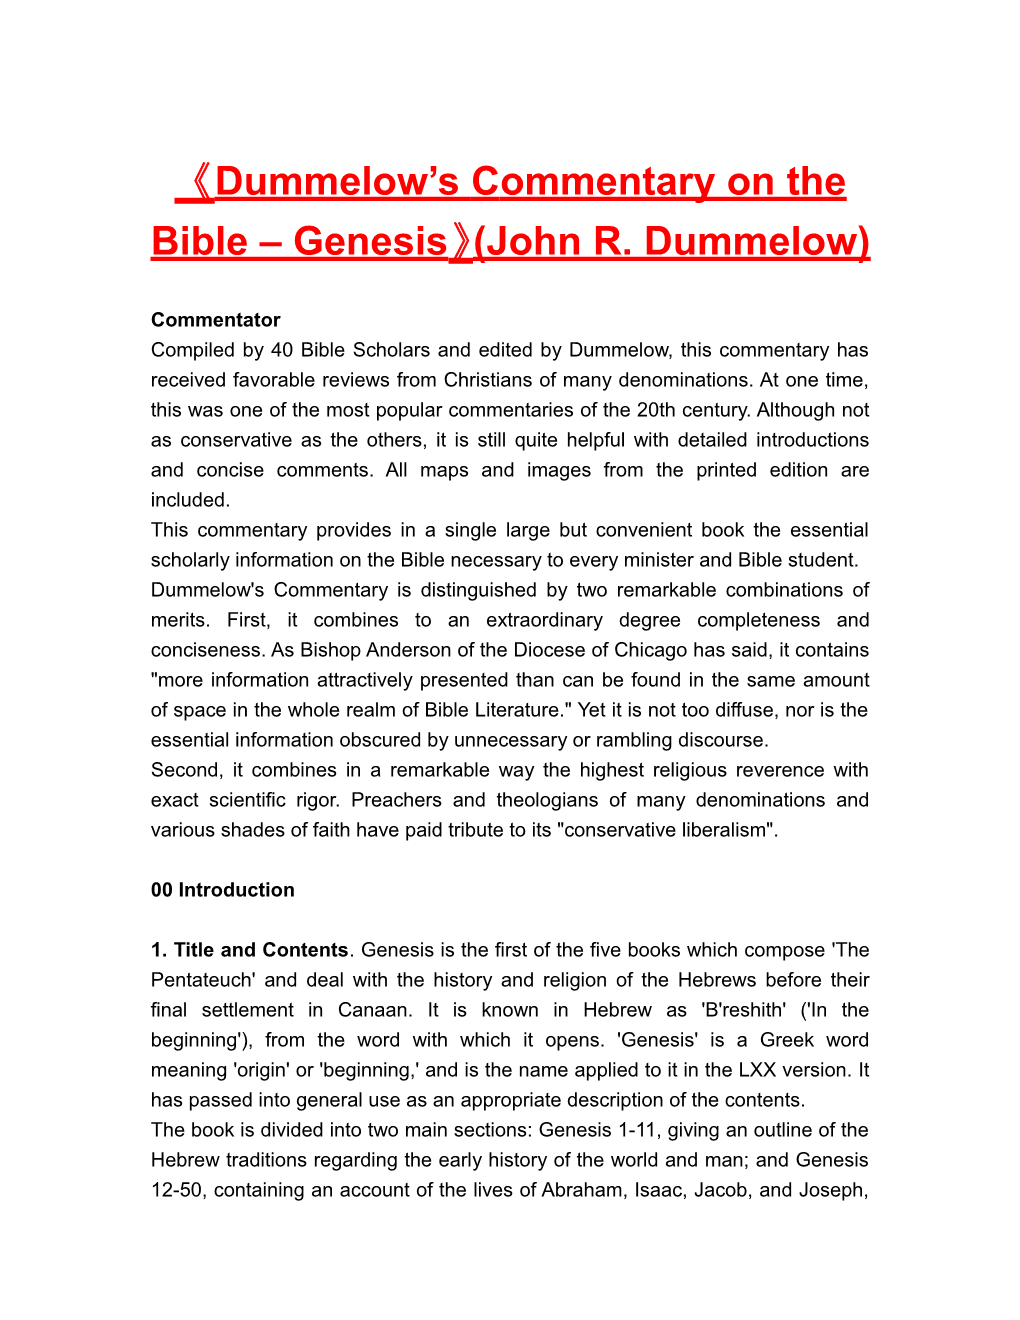 Dummelow S Commentary on the Bible Genesis (John R. Dummelow)